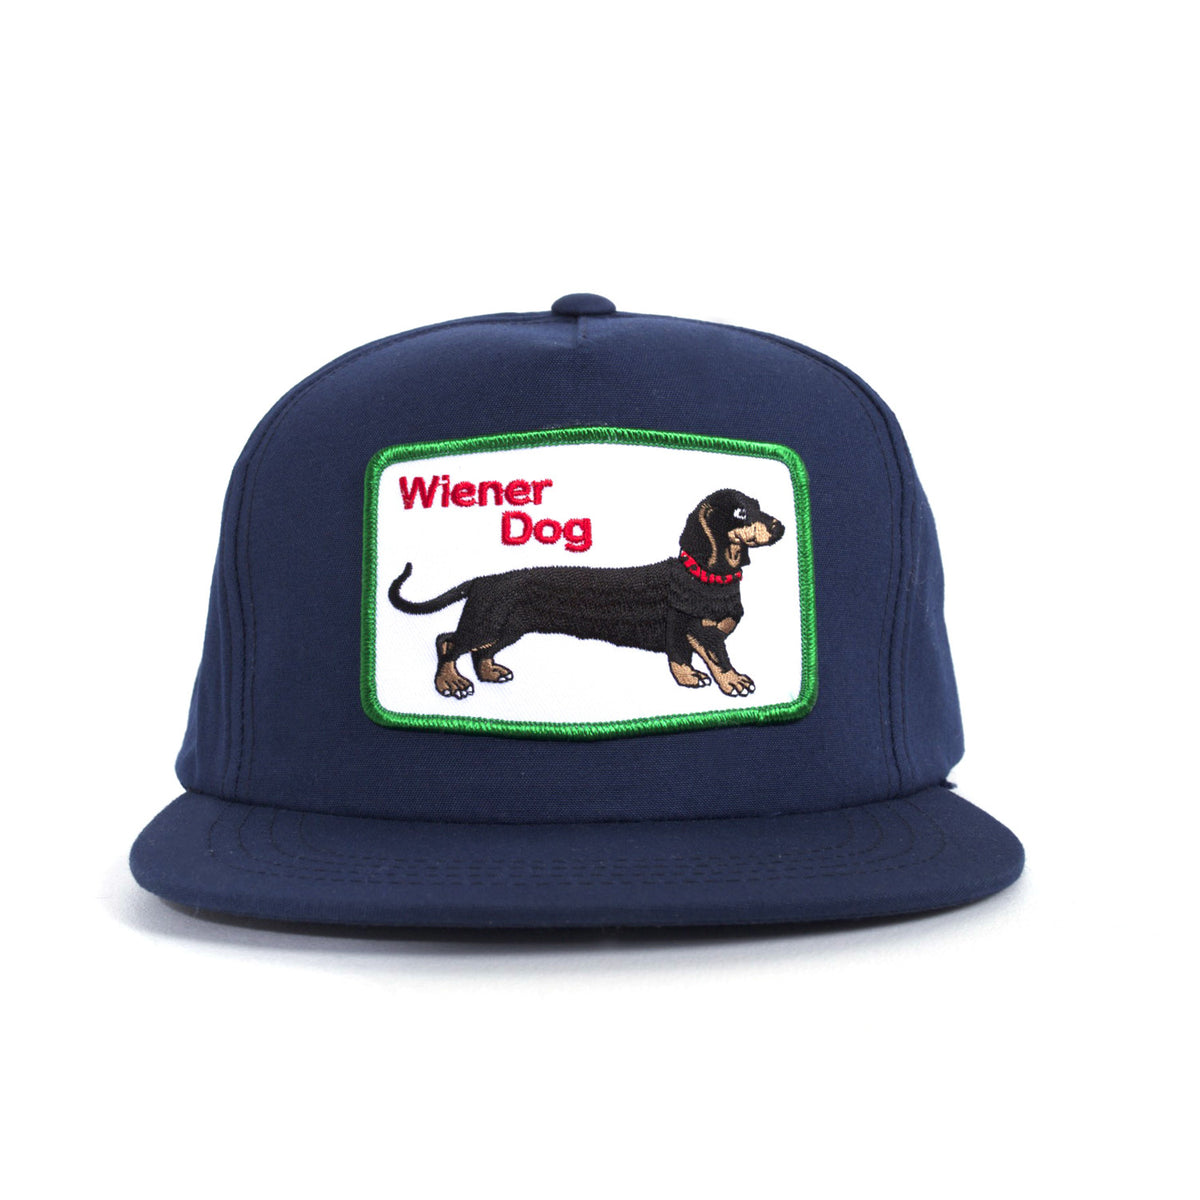 Wiener Dog Snapback